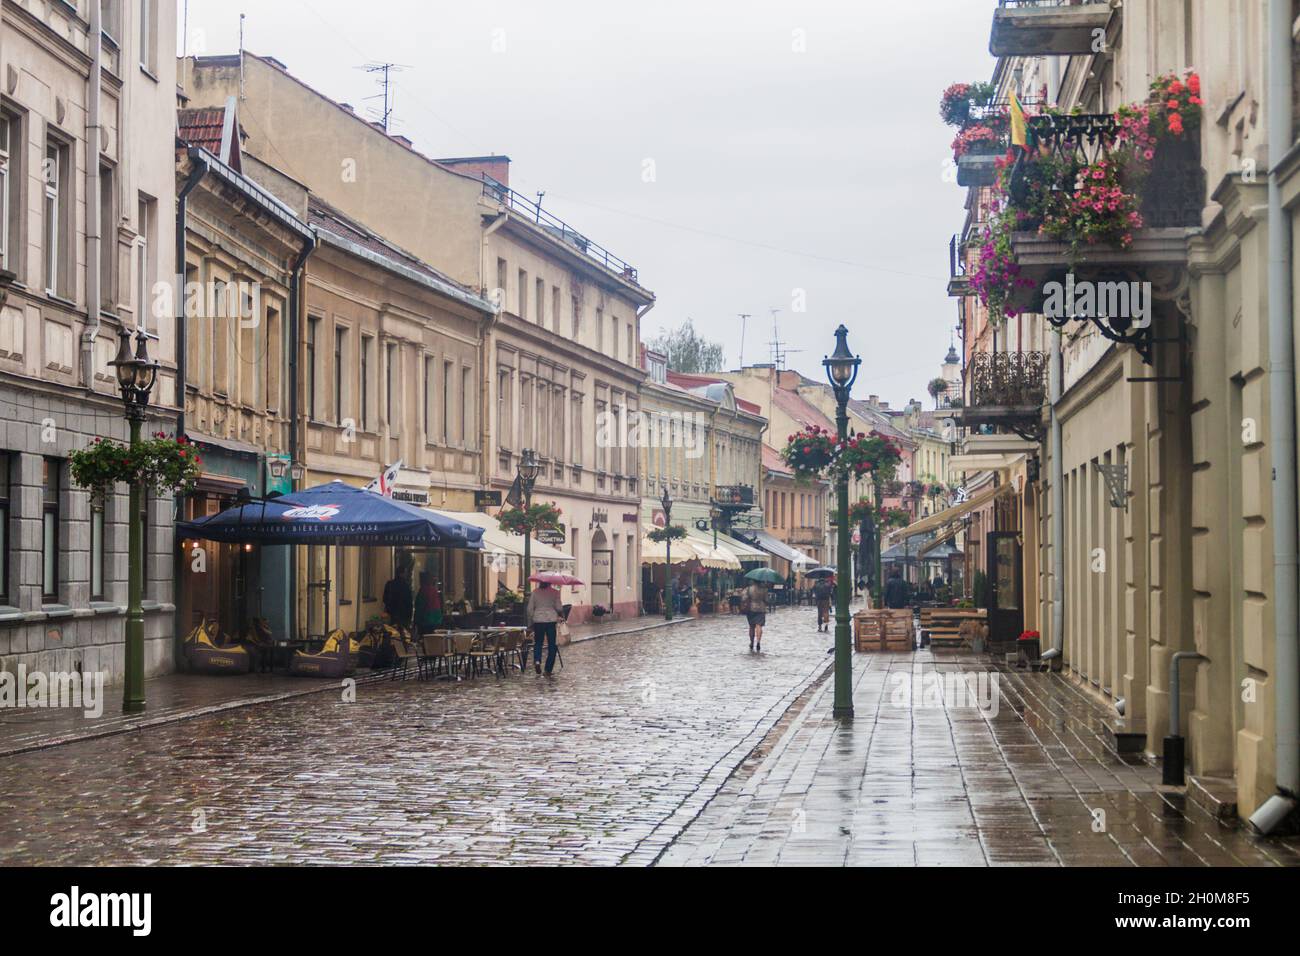 KAUNAS, LITHUANIA - AUGUST 16, 2016: People walk along Vilniaus gatve street in Kaunas, Lithuania Stock Photo